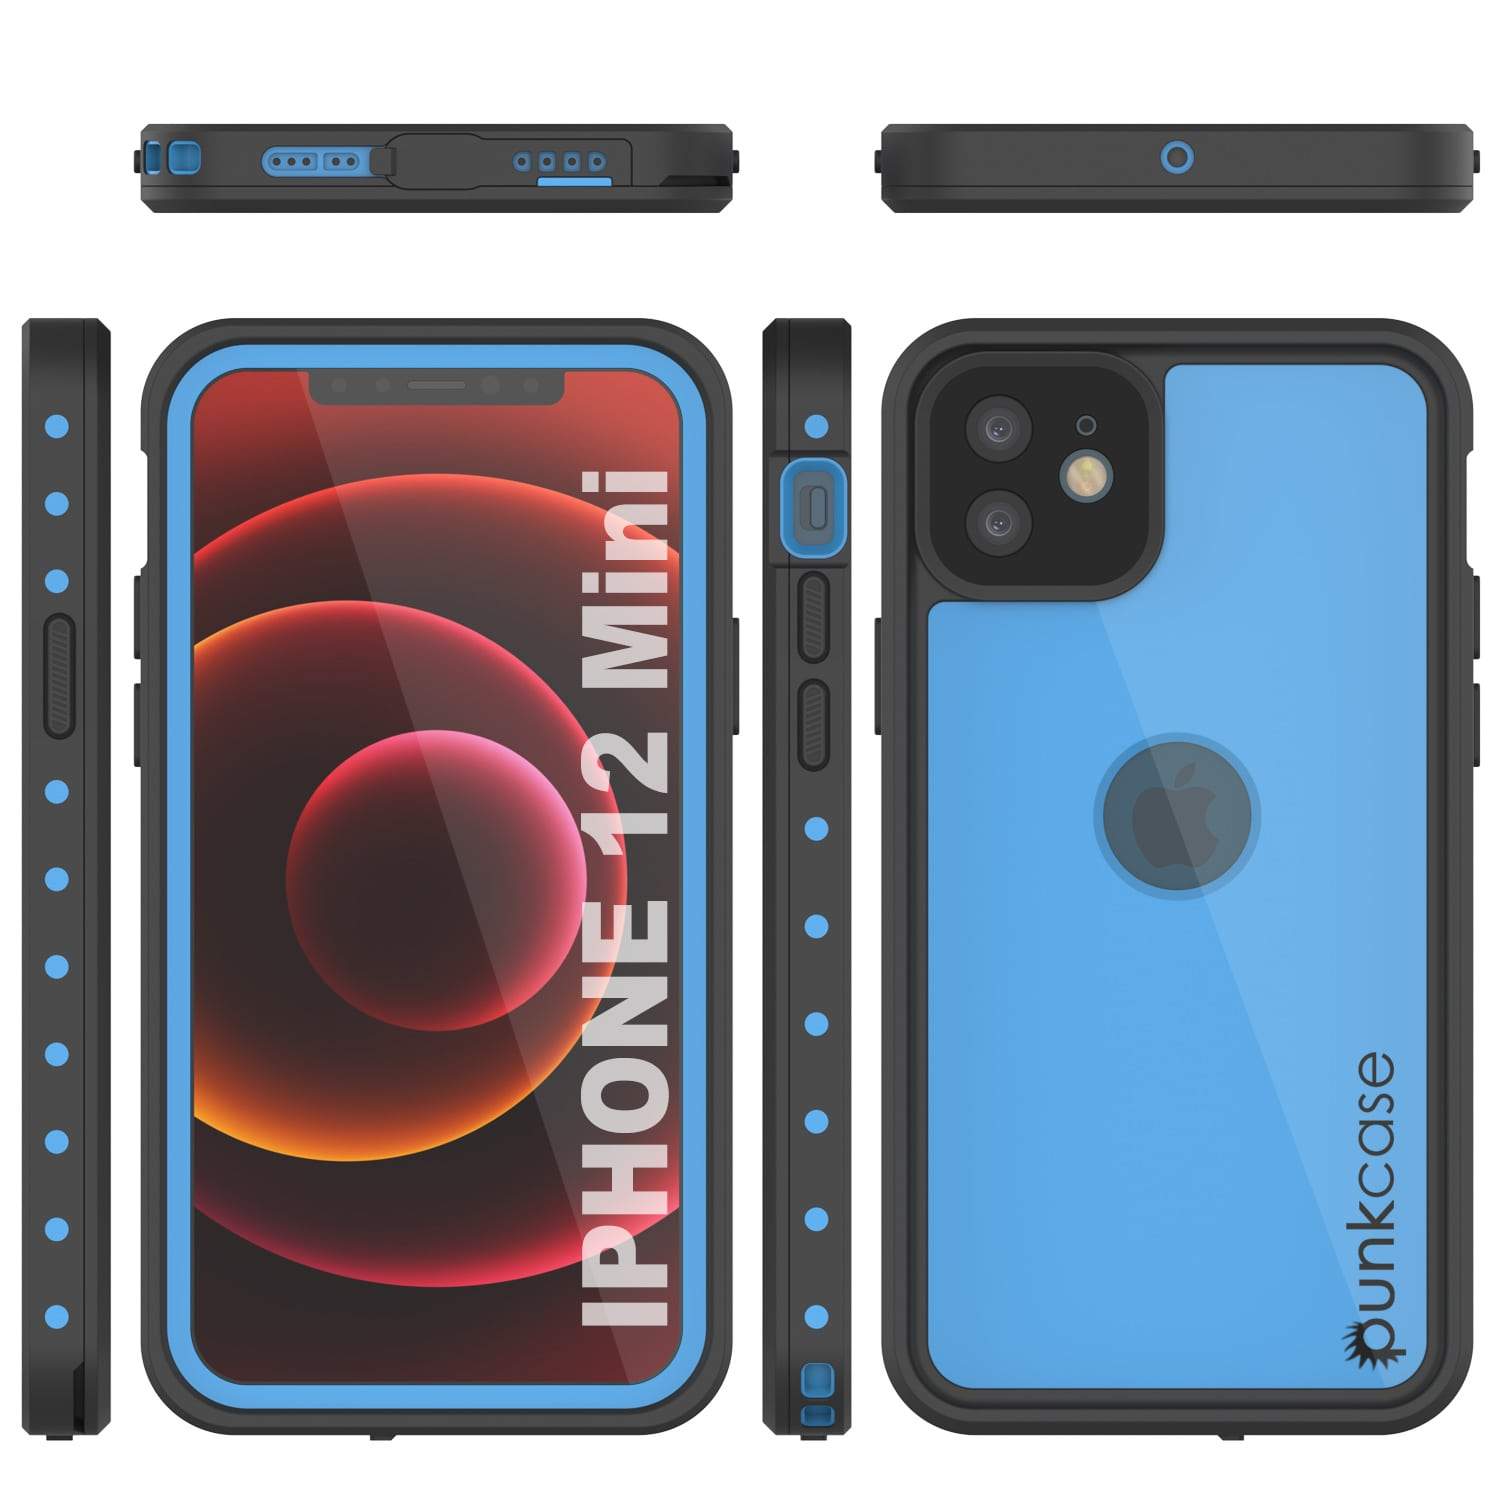 iPhone 12 Mini Waterproof IP68 Case, Punkcase [Light blue] [StudStar Series] [Slim Fit] [Dirtproof]